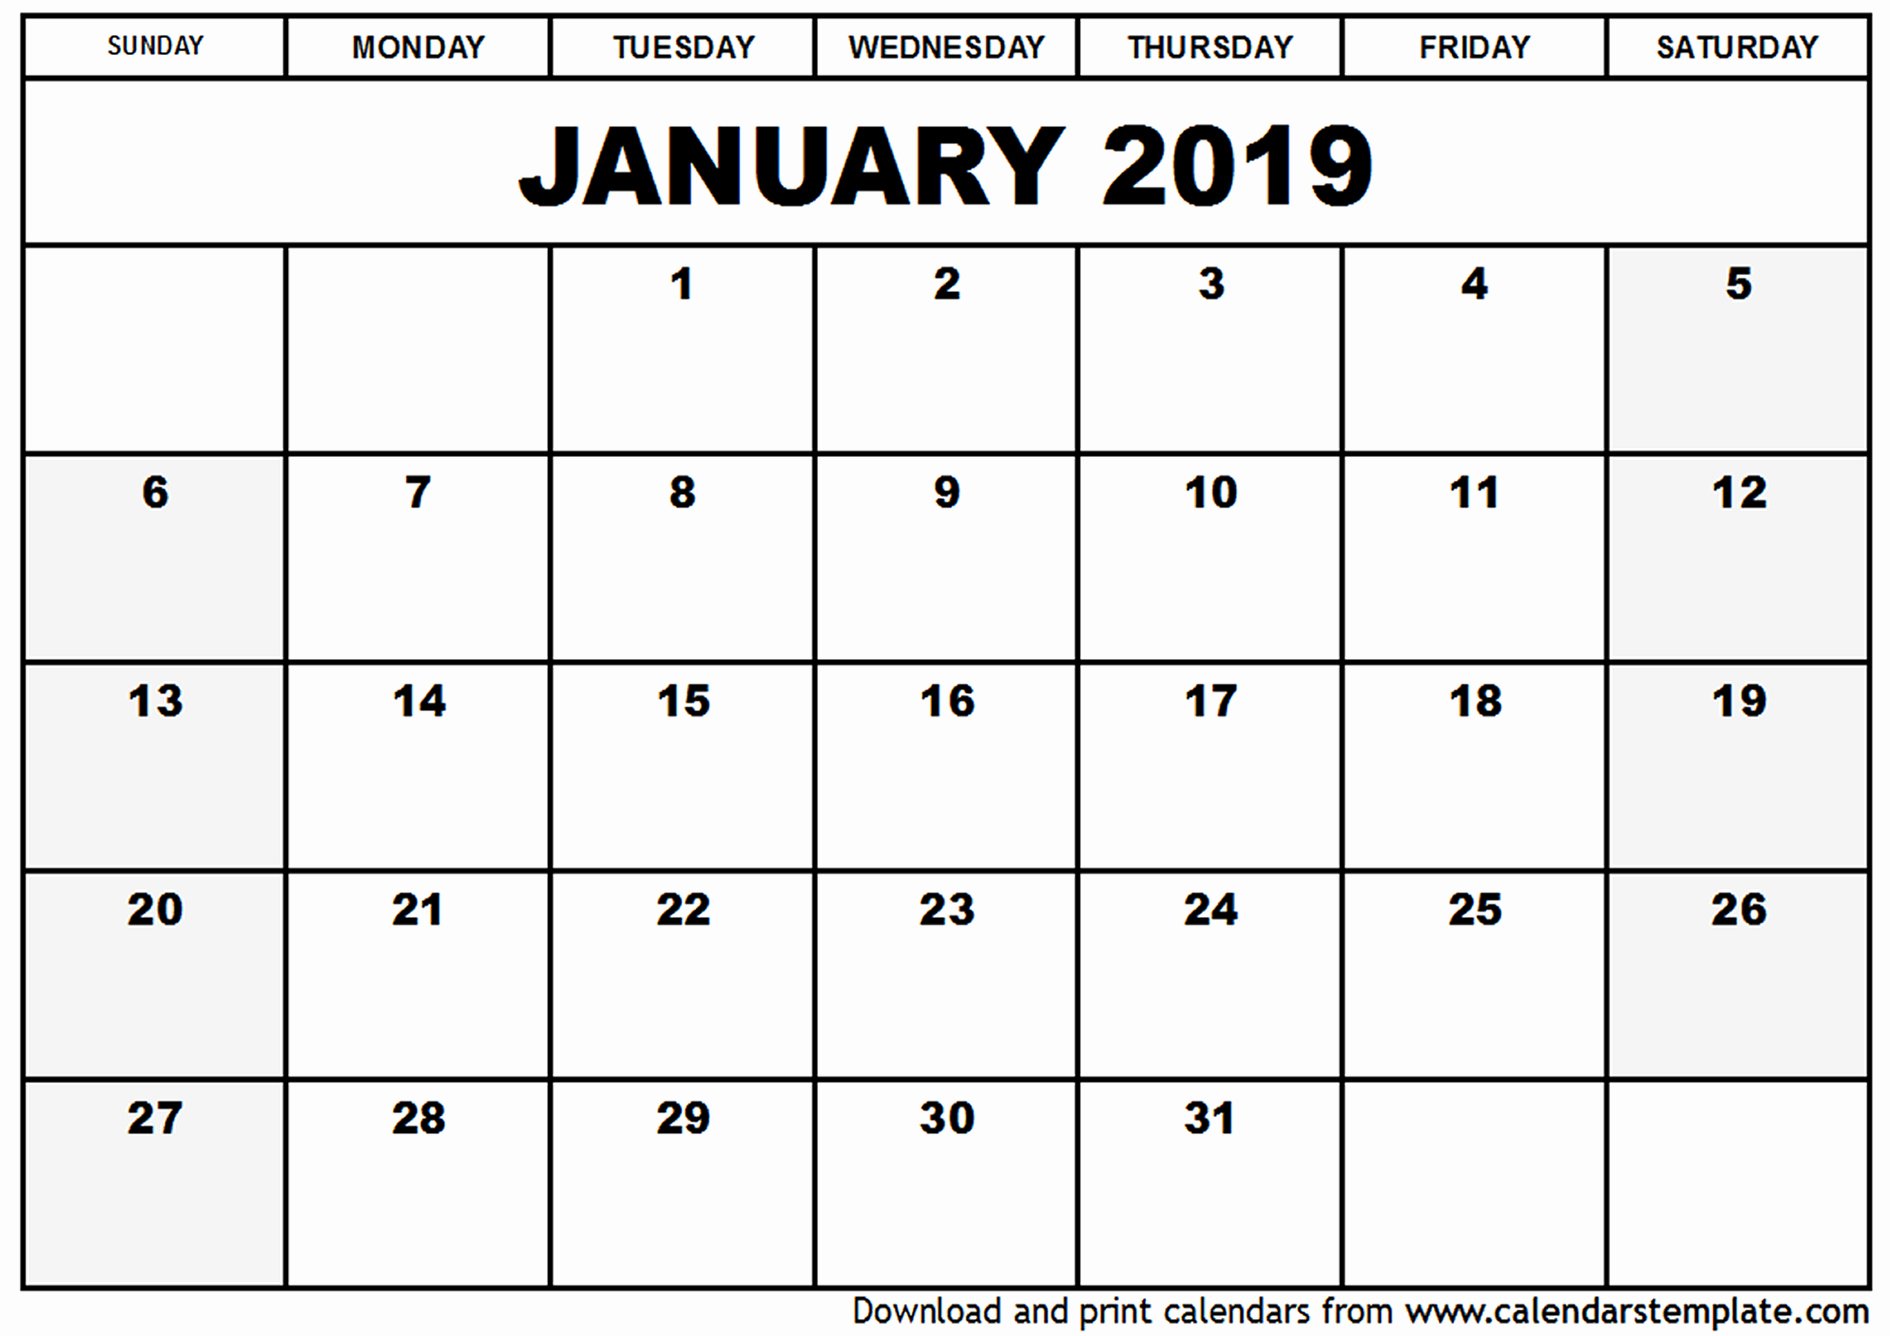 Blank Calendar Template 2019 Beautiful January 2019 Calendar Template